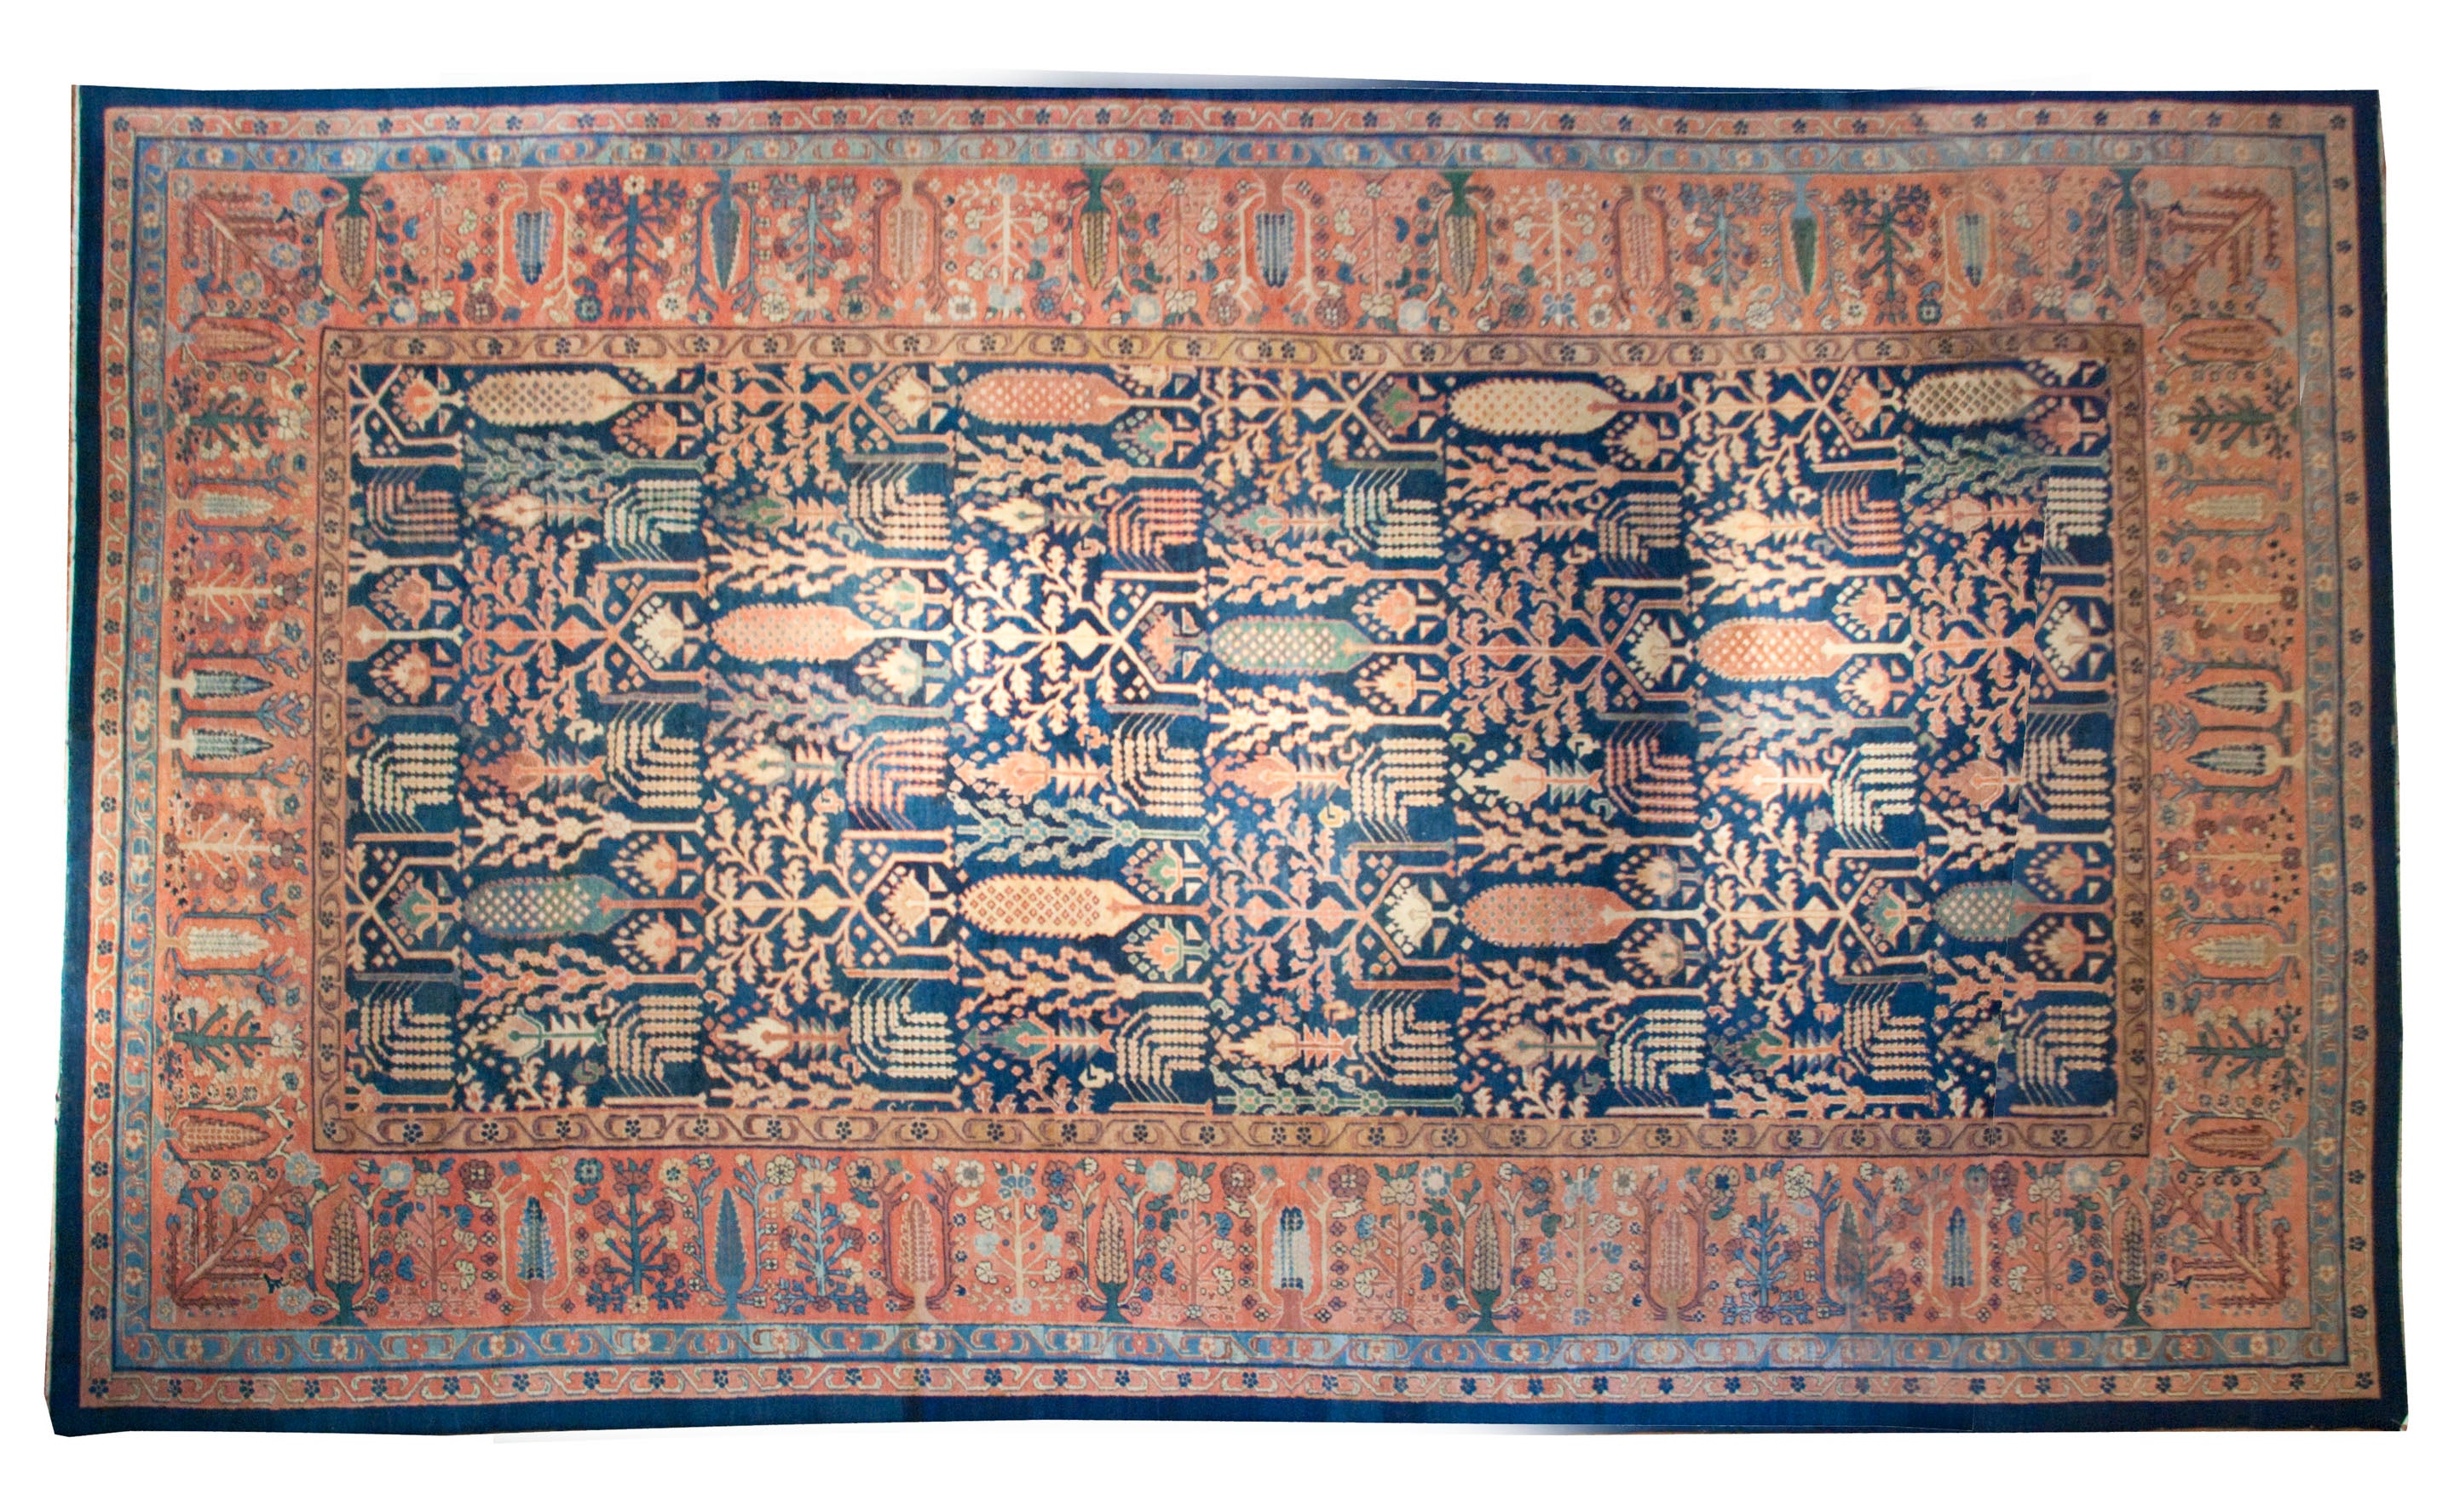 Late 19th Century Indian Agra Carpet